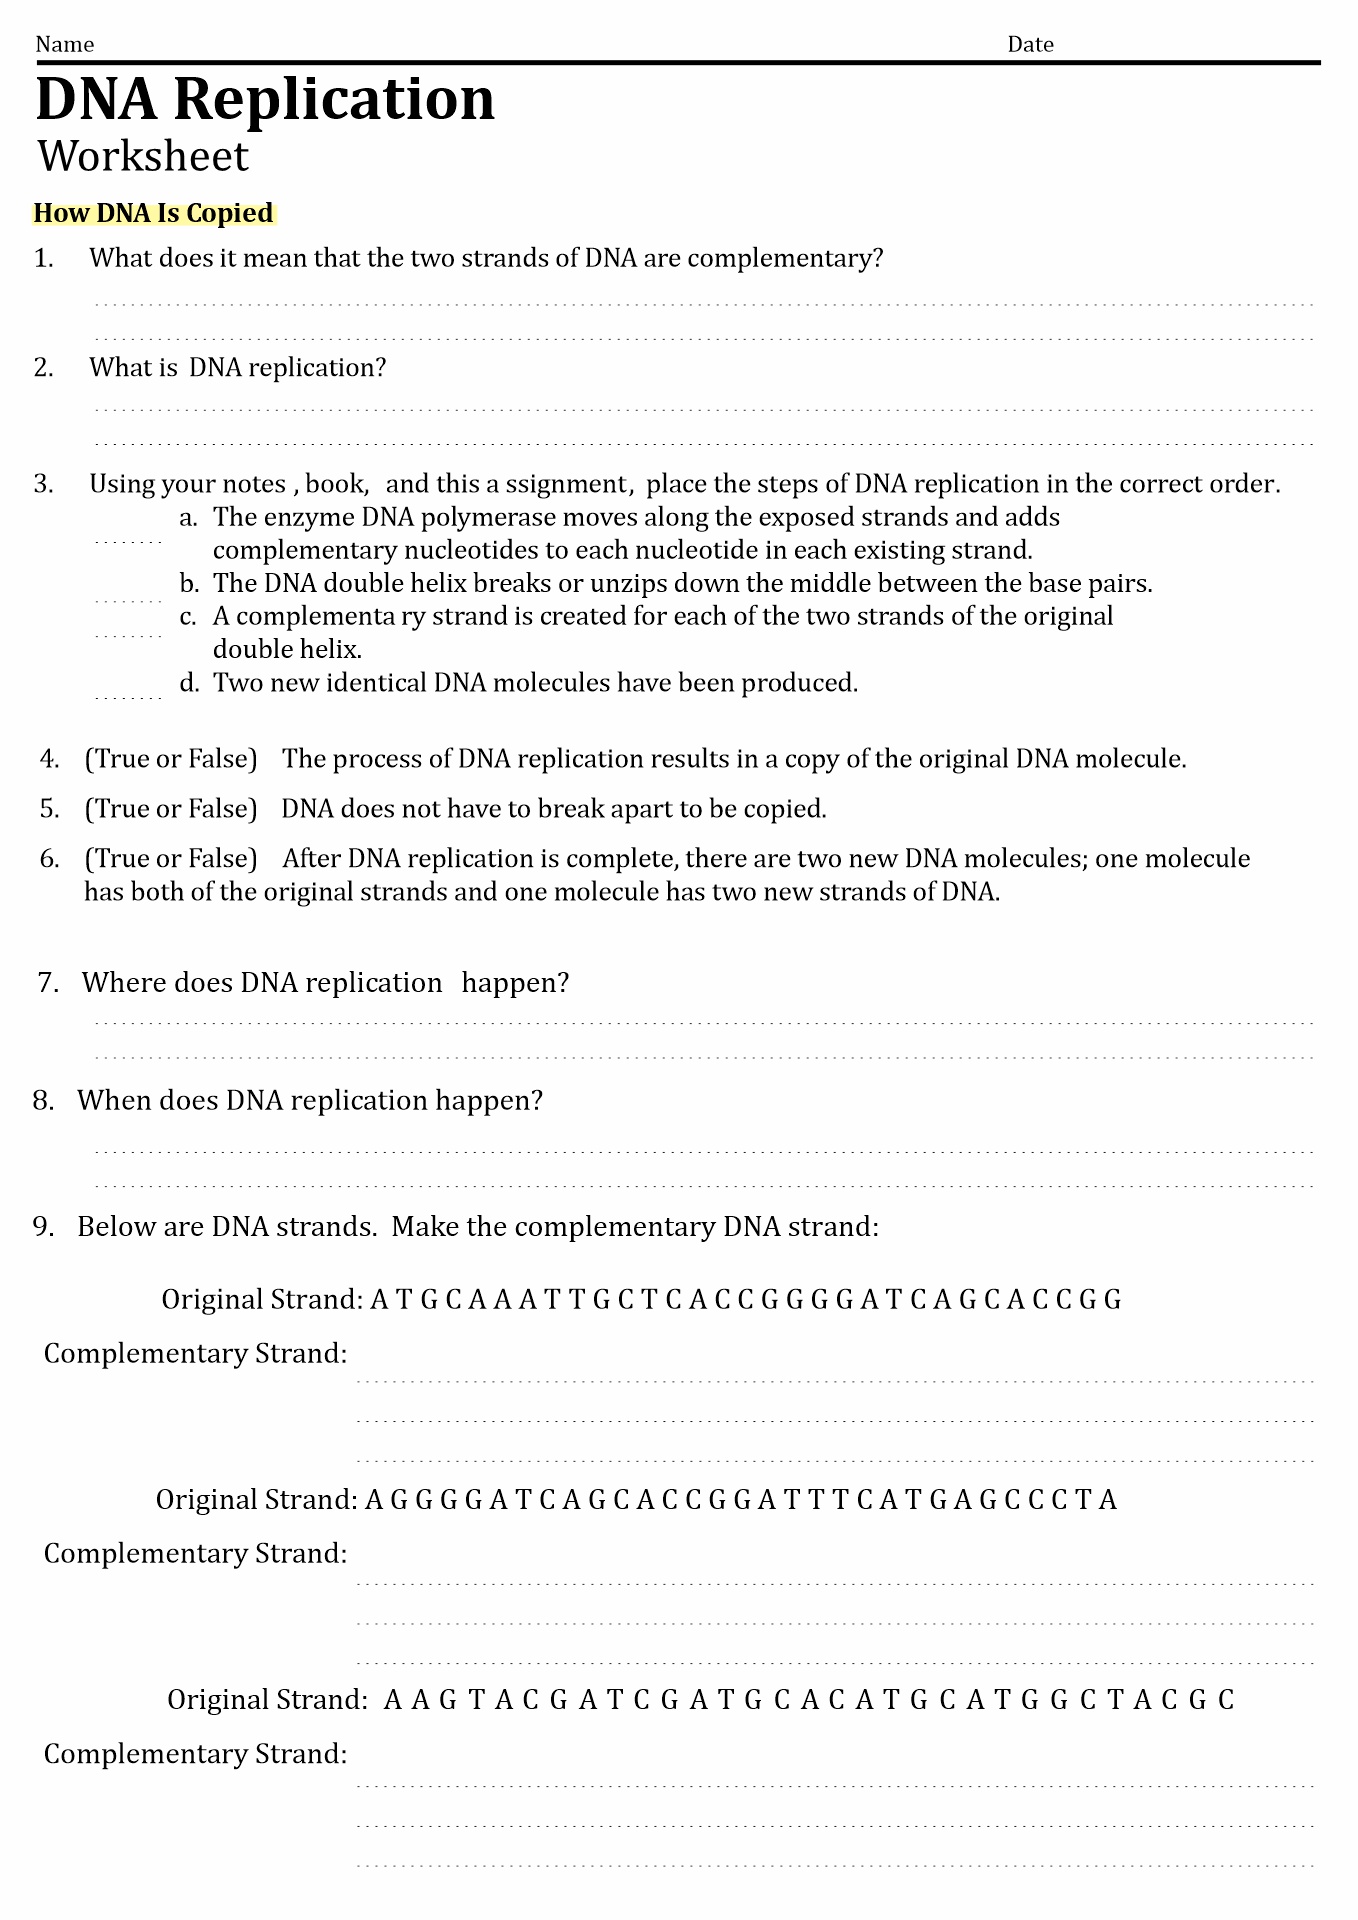 DNA Replication Worksheet Image